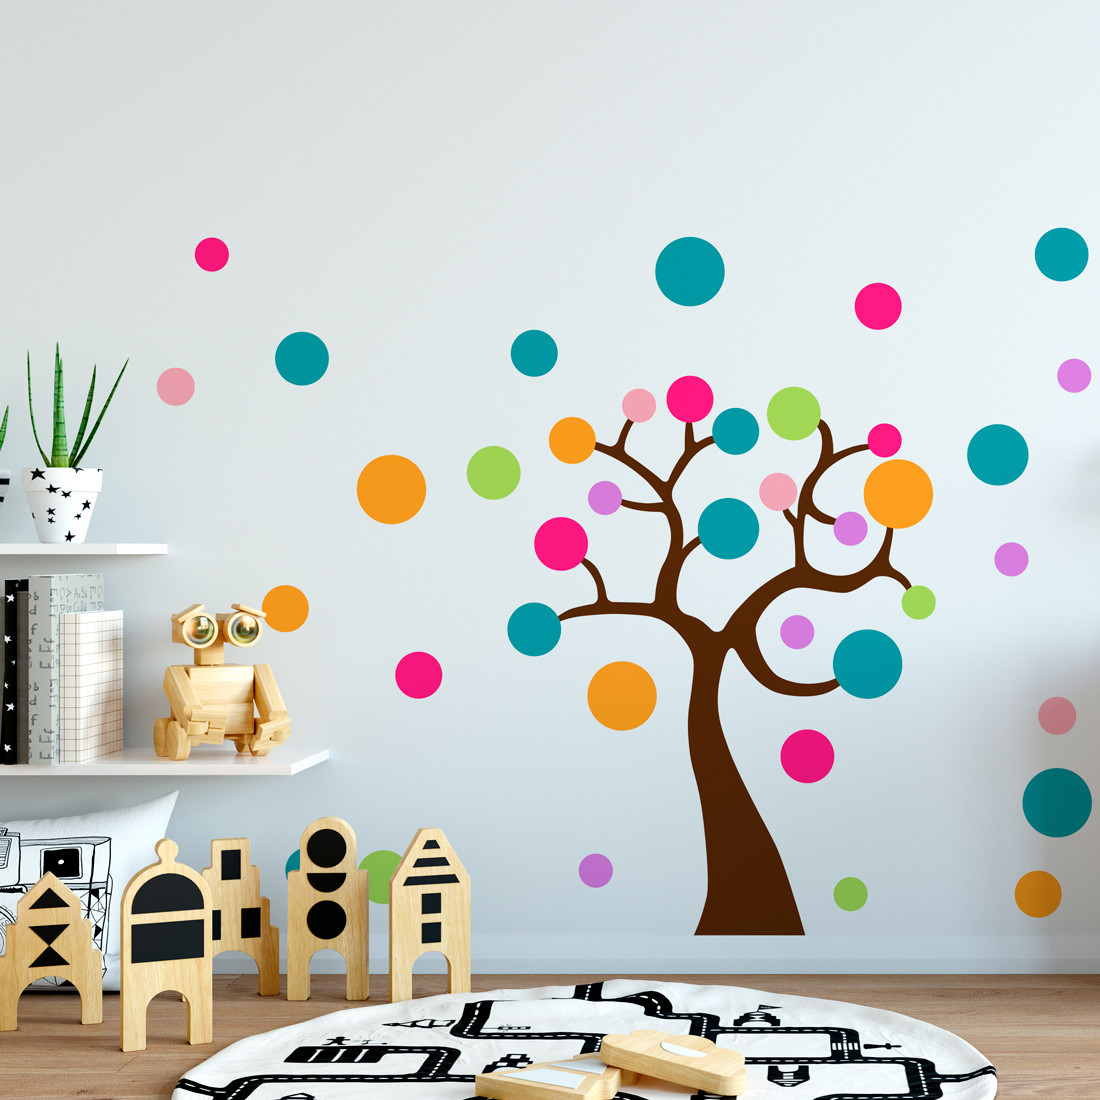 Adesivo de Parede Infantil Árvore de Bolas Coloridas - Modelo Exclusivo |  Bem Colar